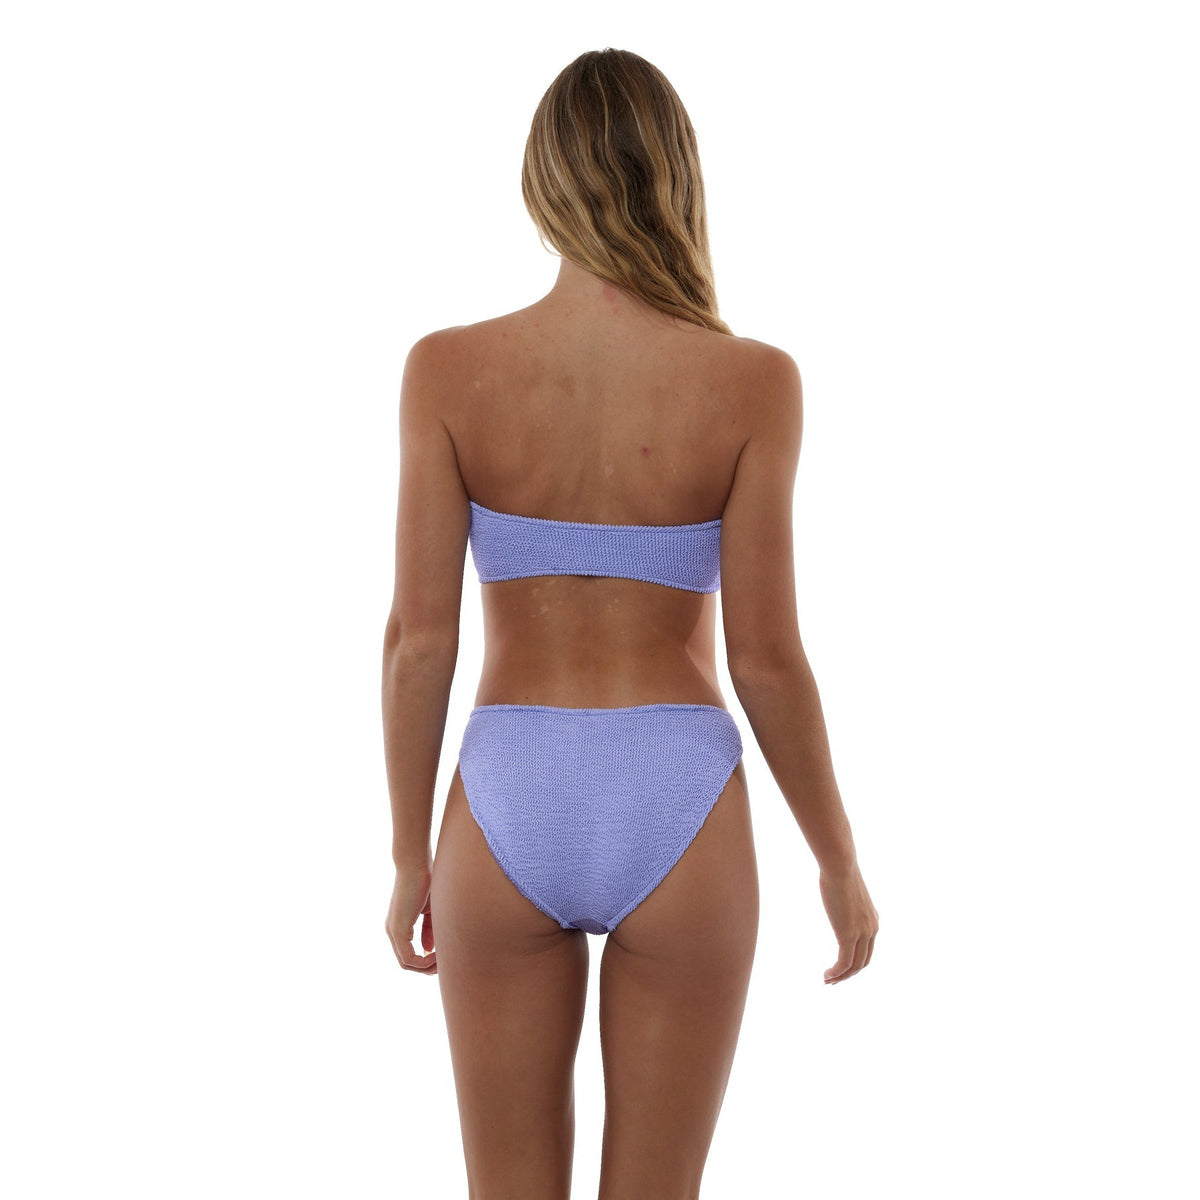 Palma Classic One Size Bikini Bottom